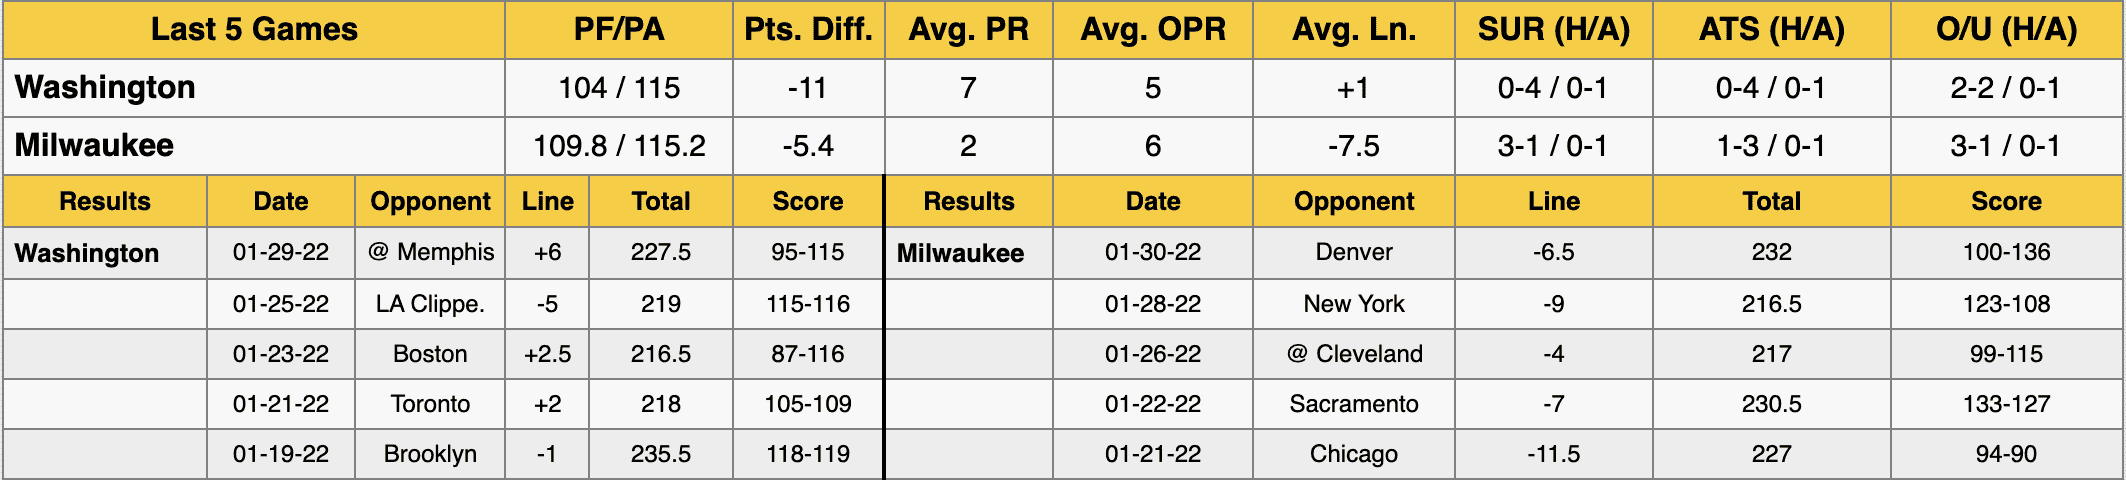 Washington Wizards at Milwaukee Bucks Data